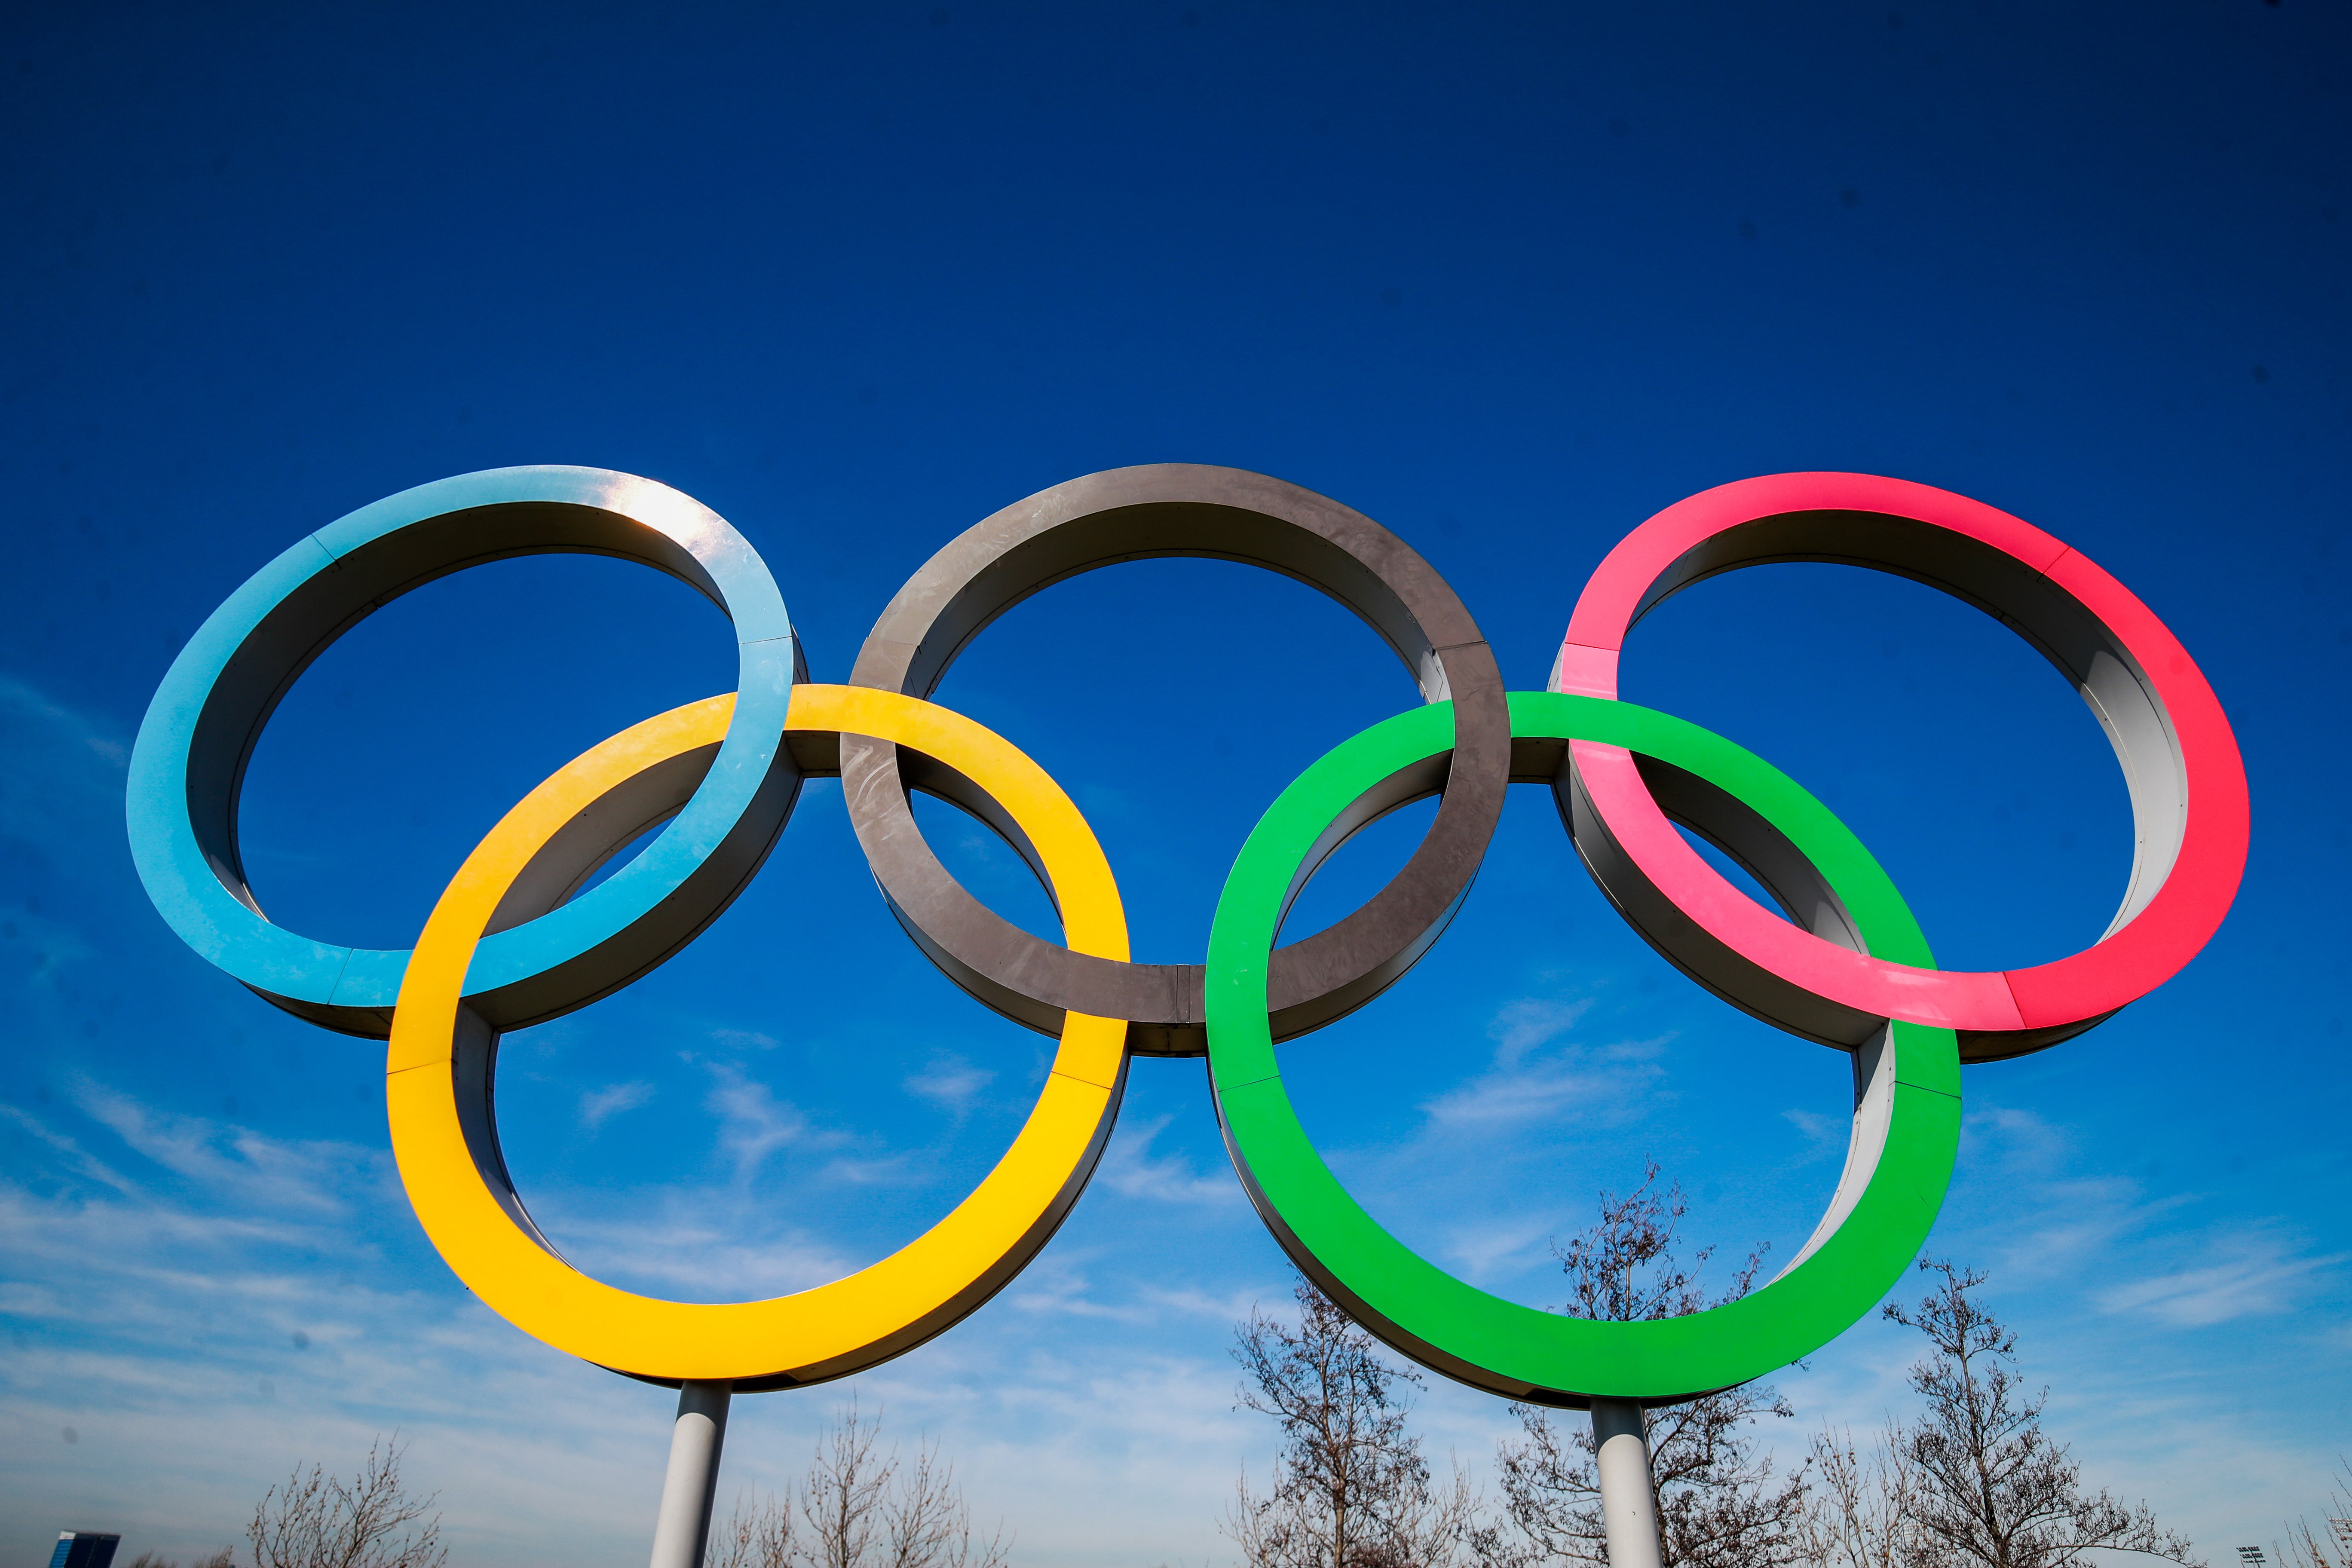 Team GB had six self-isolating at the Tokyo 2020 Olympics